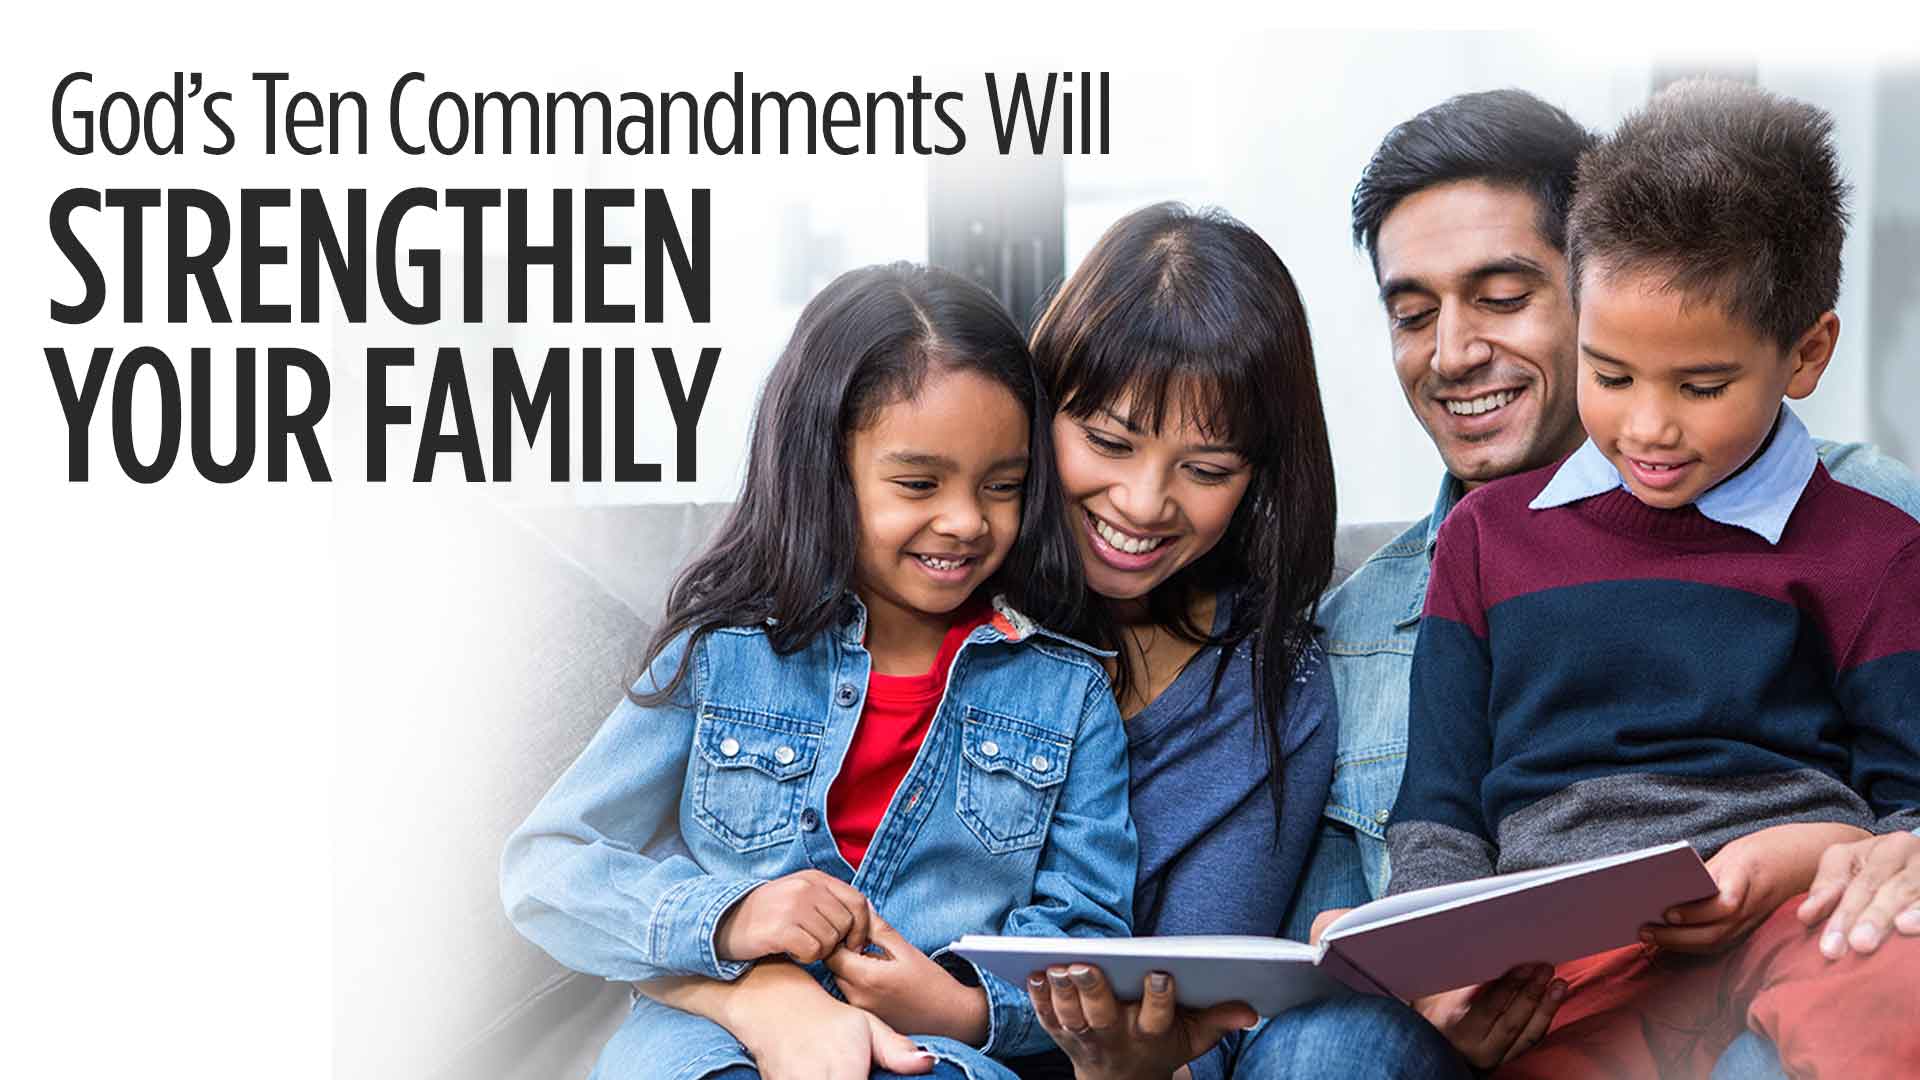 Gods Ten Command Strengthen Your Family 1920x1080